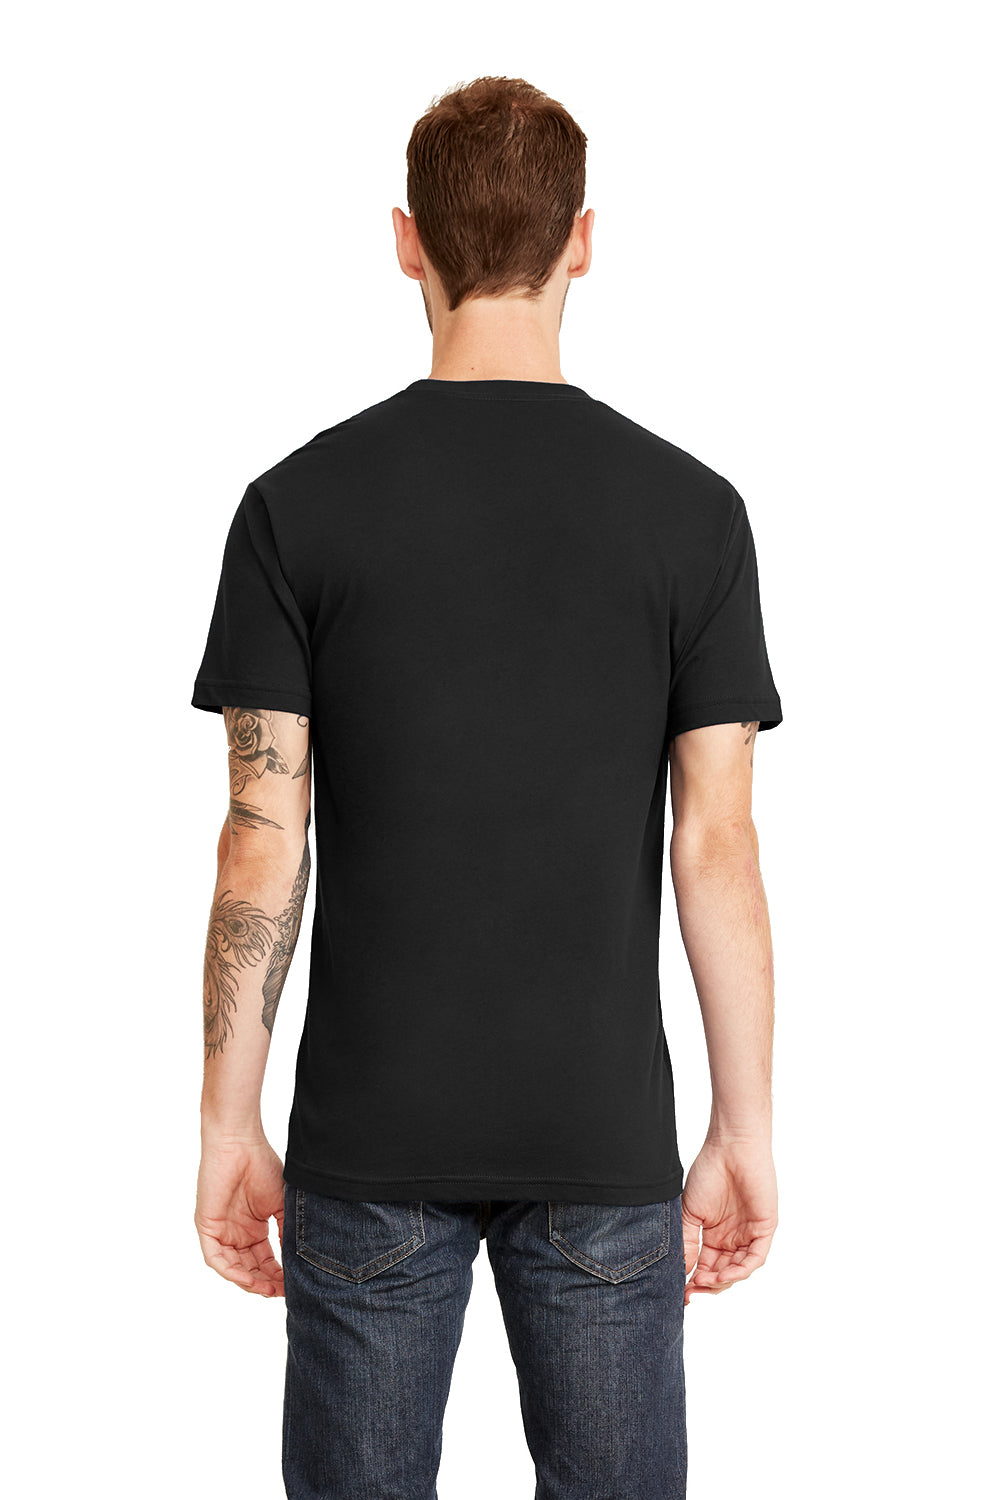 Next Level 3605 Mens Fine Jersey Short Sleeve Crewneck T-Shirt w/ Pocket Black Back